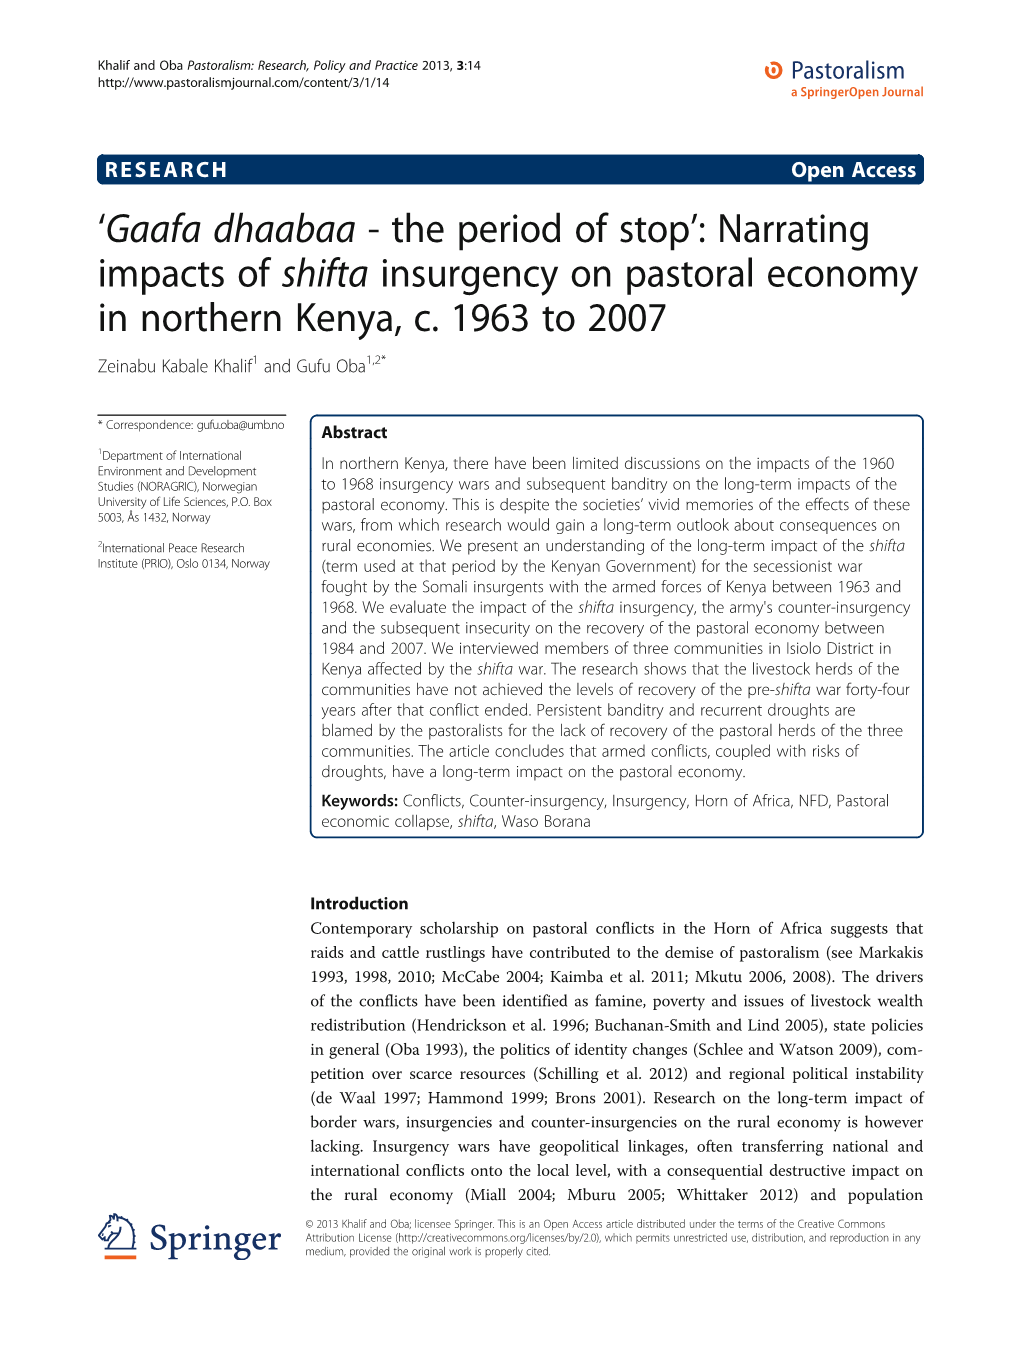 Narrating Impacts of Shifta Insurgency on Pastoral Economy in Northern Kenya, C